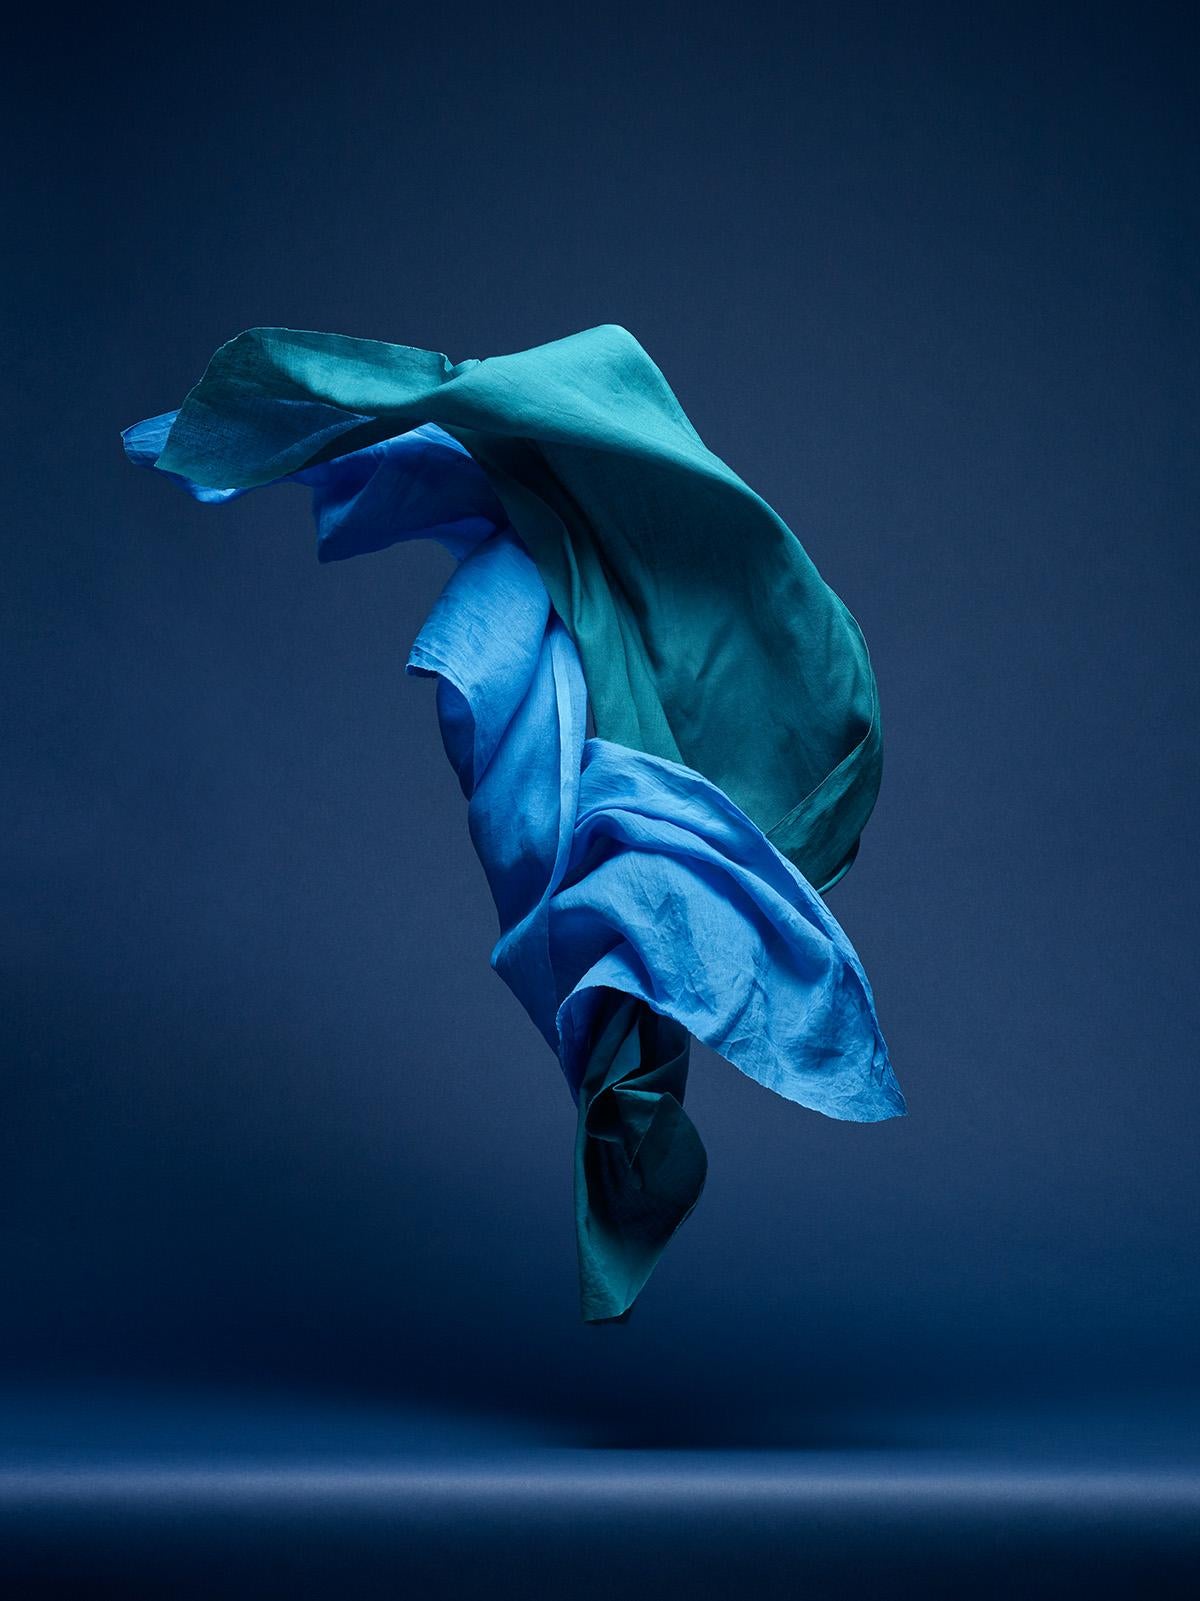 Color Photograph Neal Grundy - Tissu de danse bleu clair et vert 2